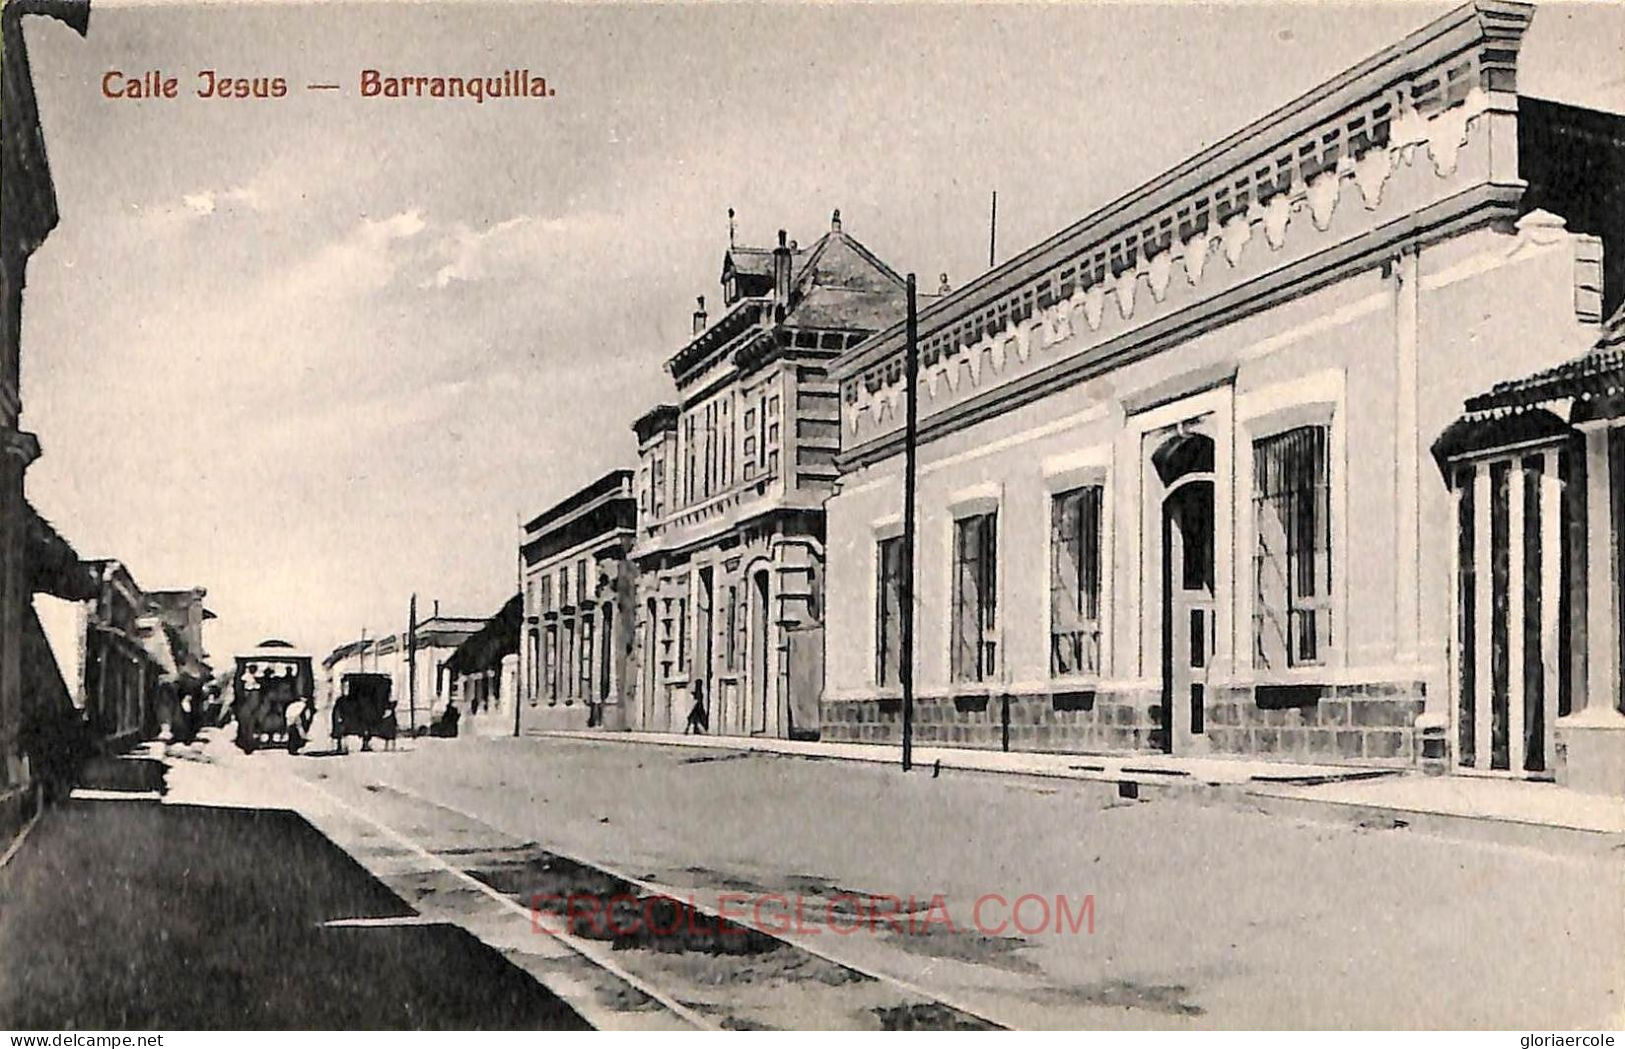 Ac8369 - COLOMBIA -  Vintage Postcard - Barranquilla, Calle Jesus - Colombie